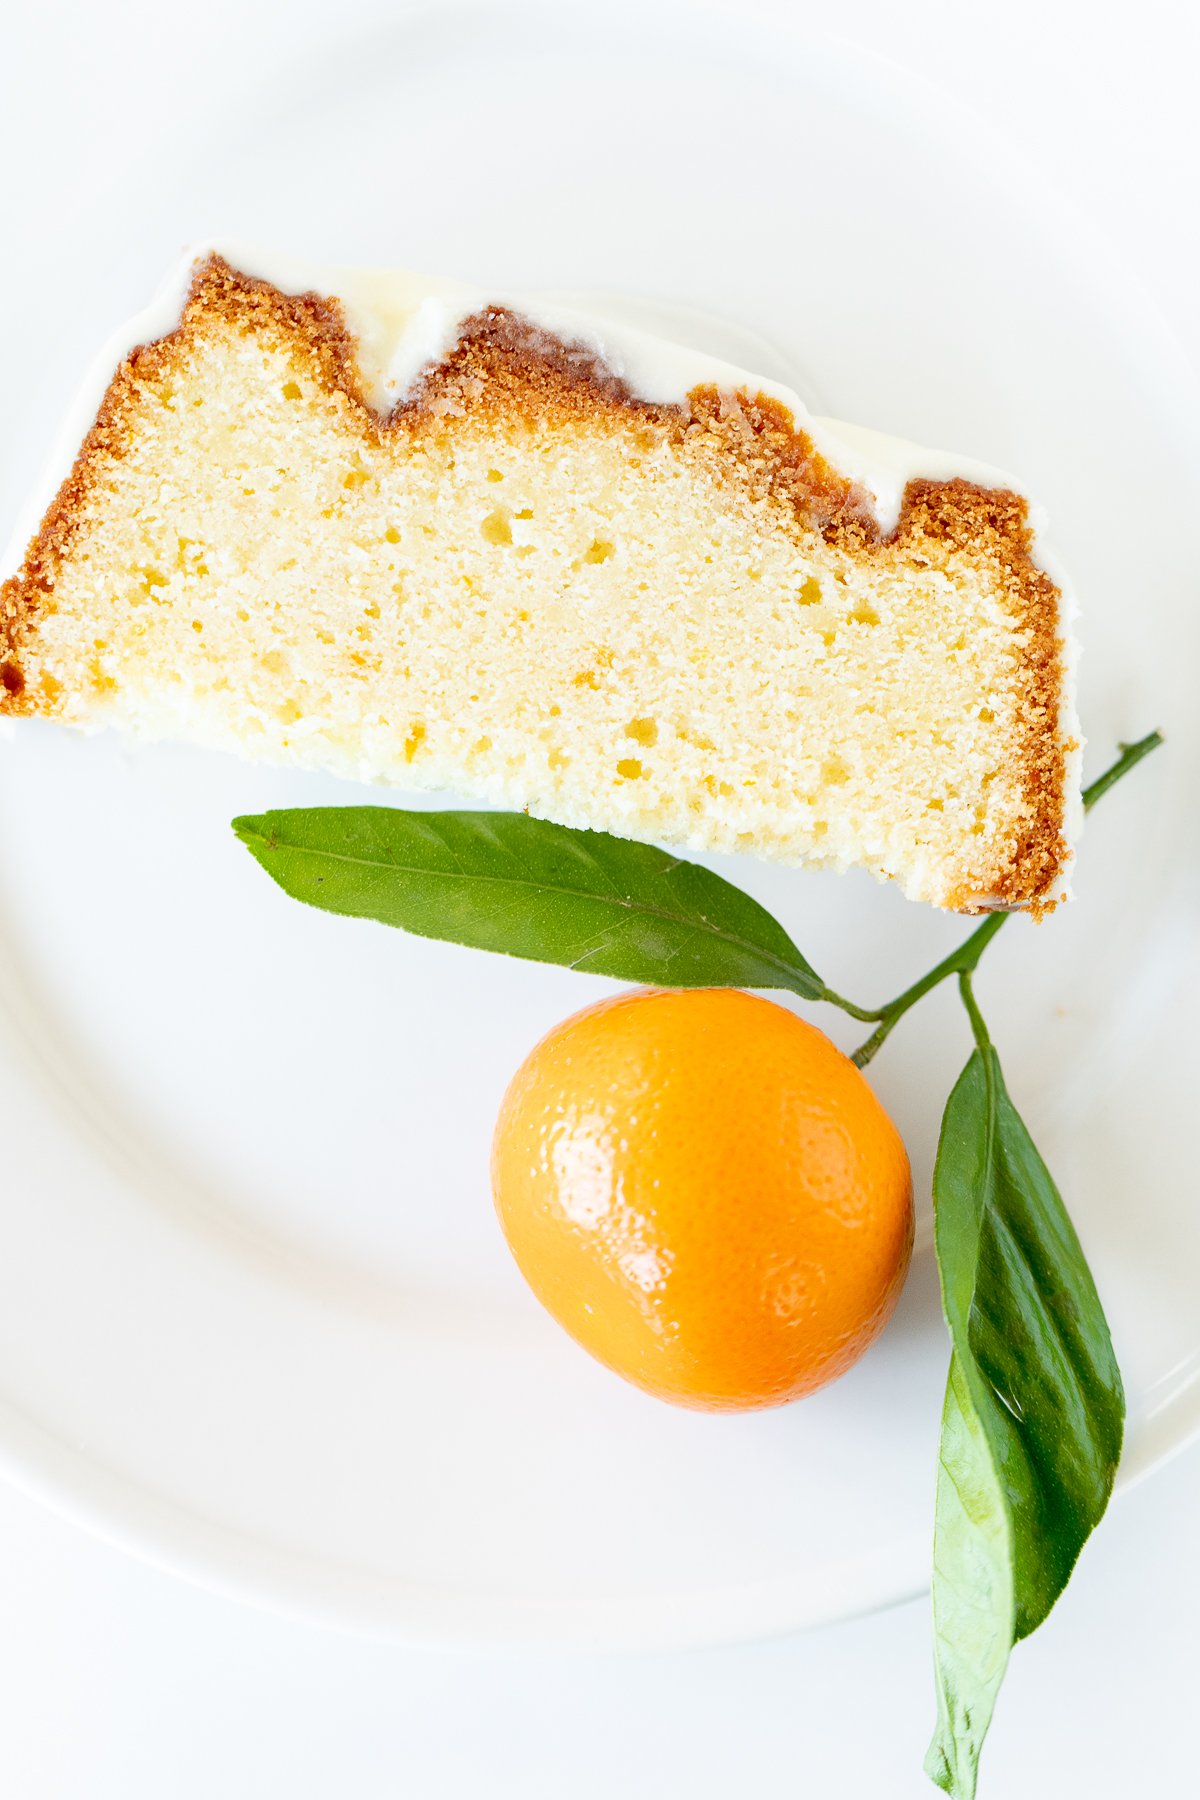 A slice of orange pound cake on a white plate.